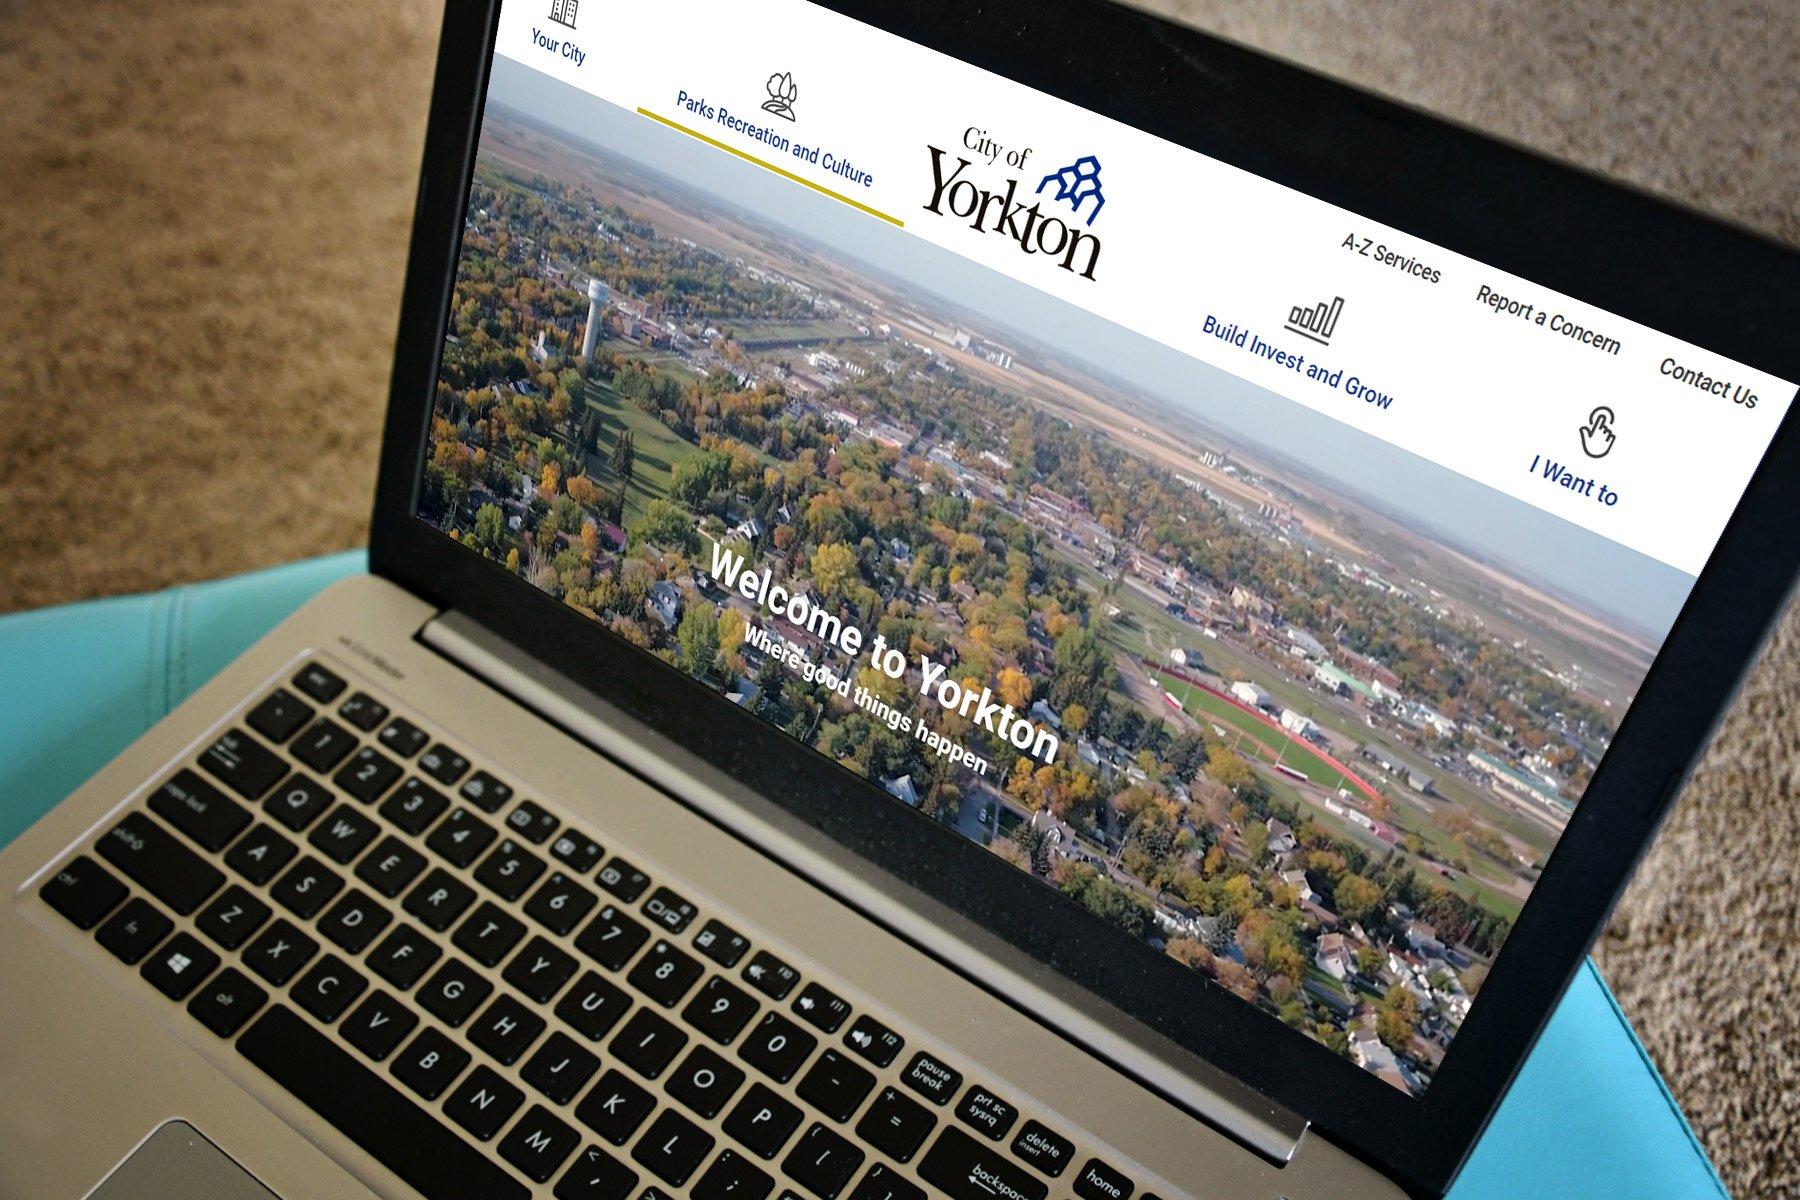 City of Yorkton website on a laptop 